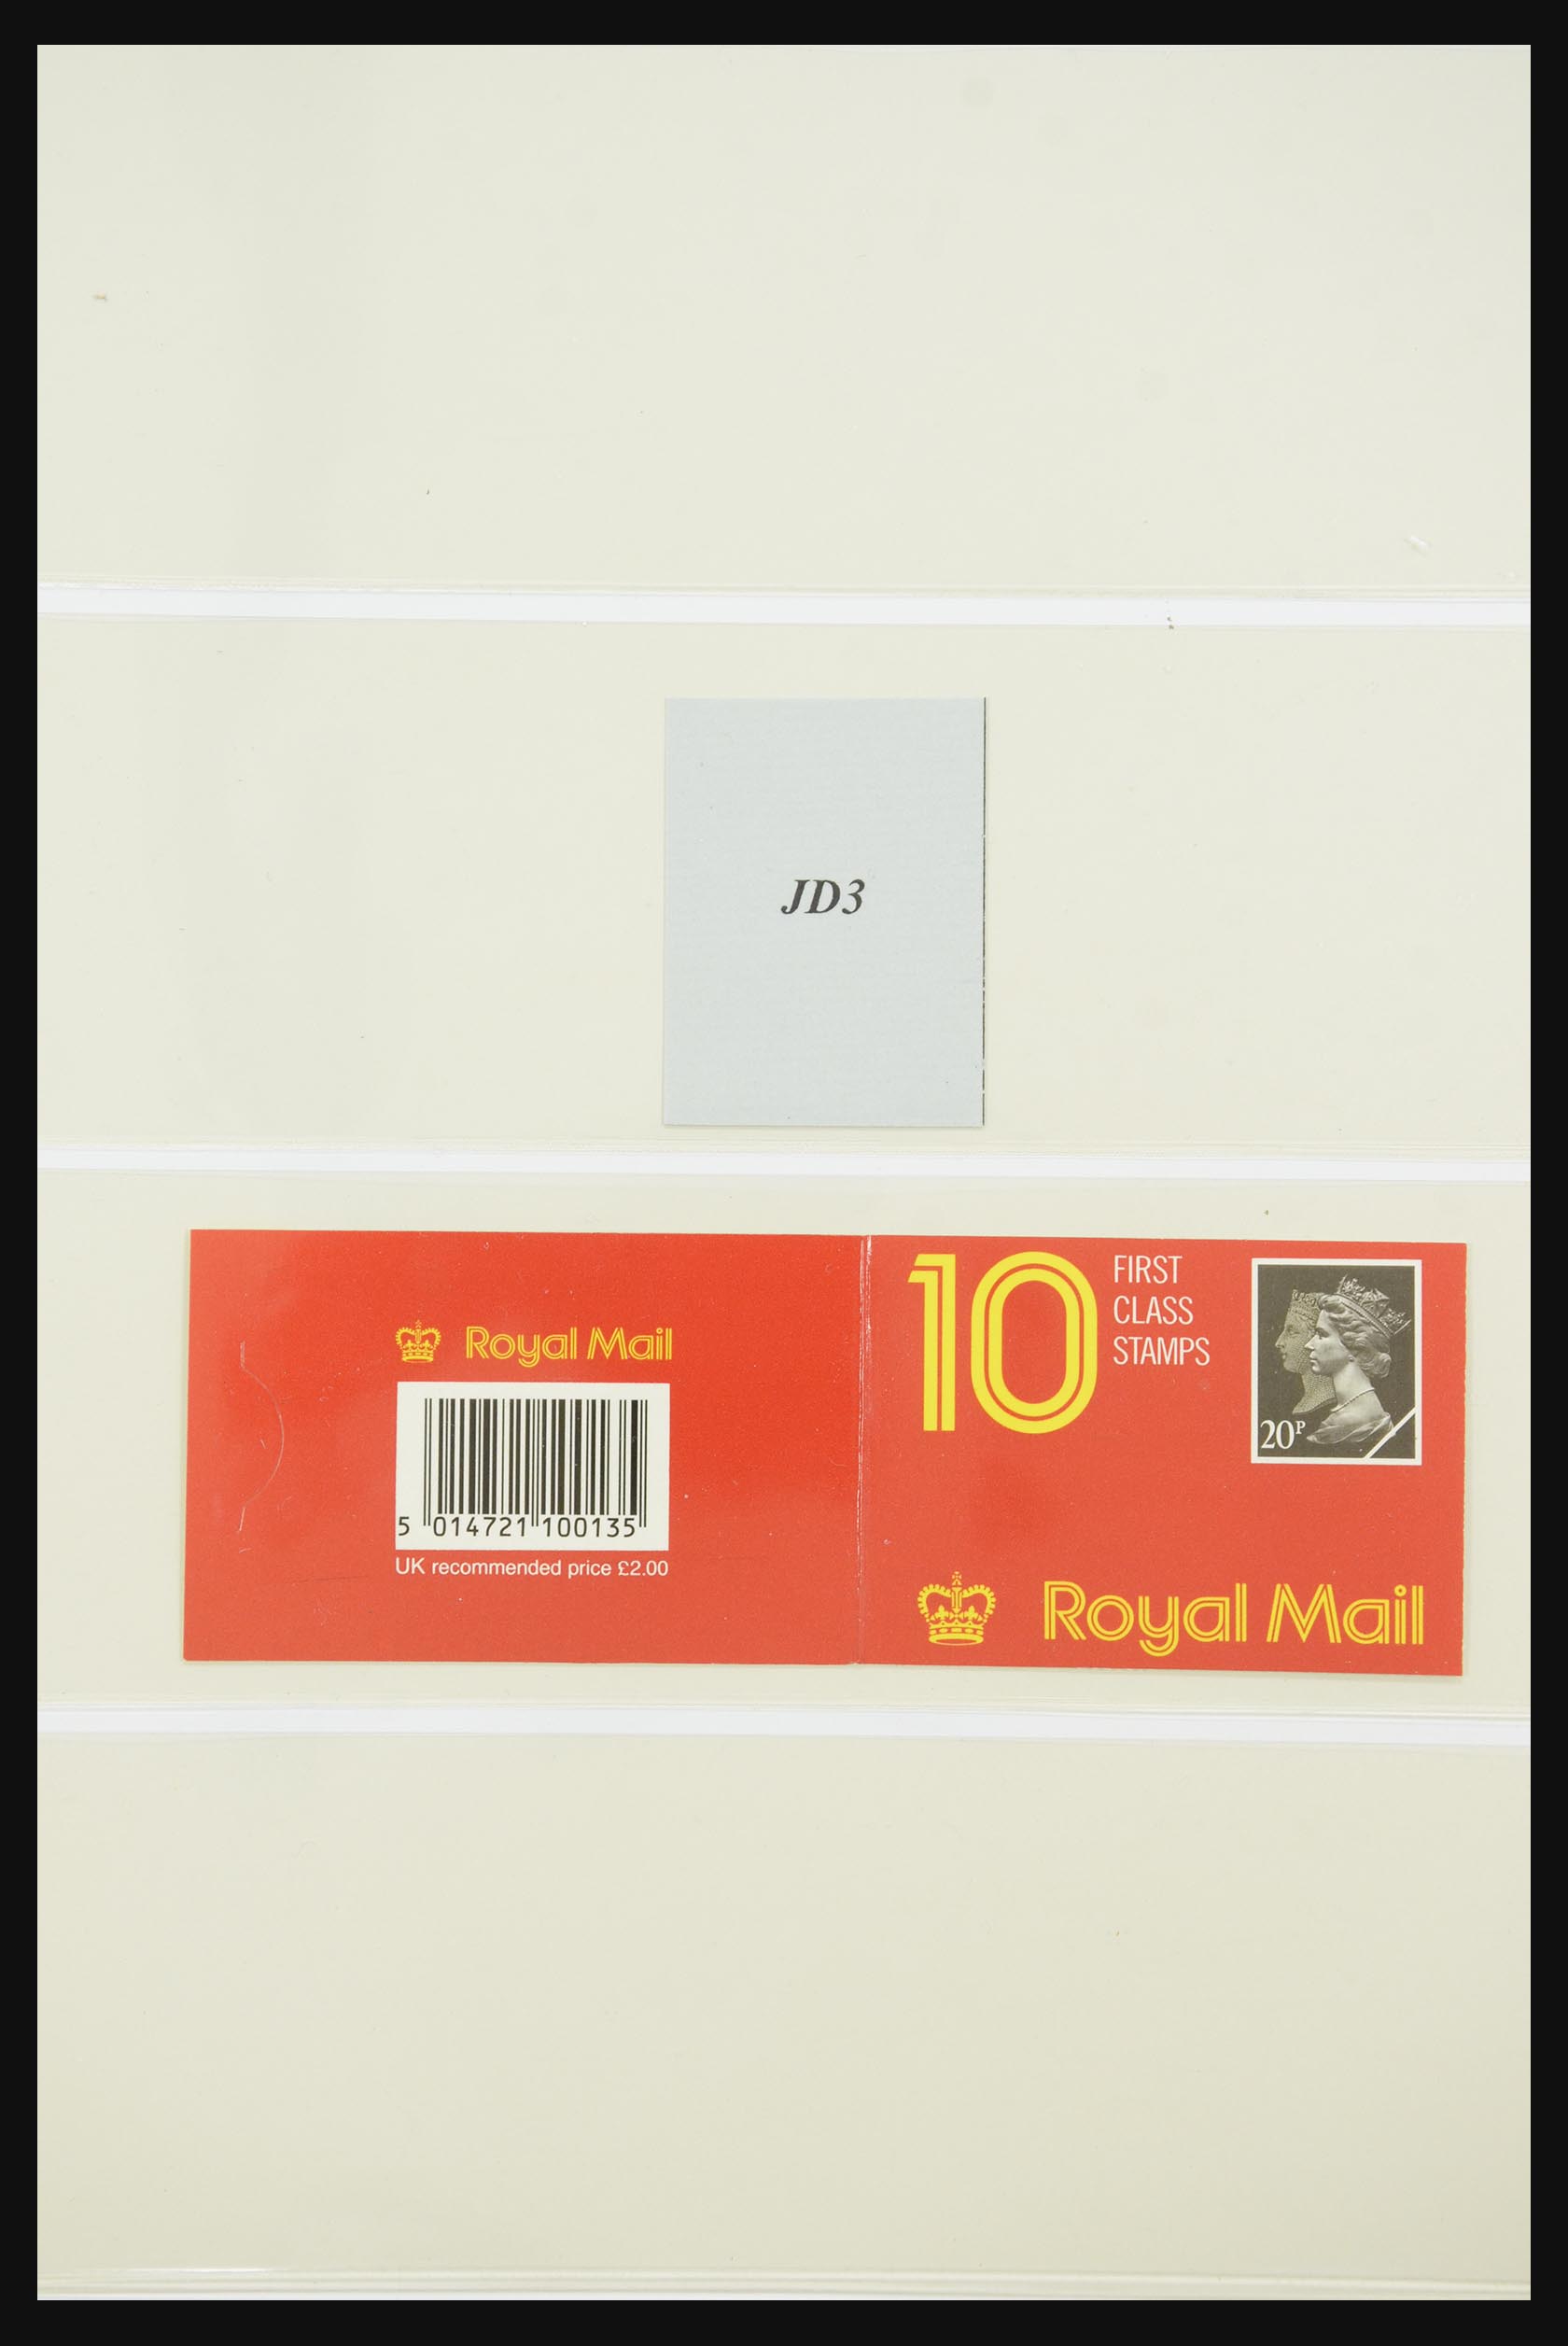 31960 189 - 31960 Great Britain stampbooklets 1989-2000.